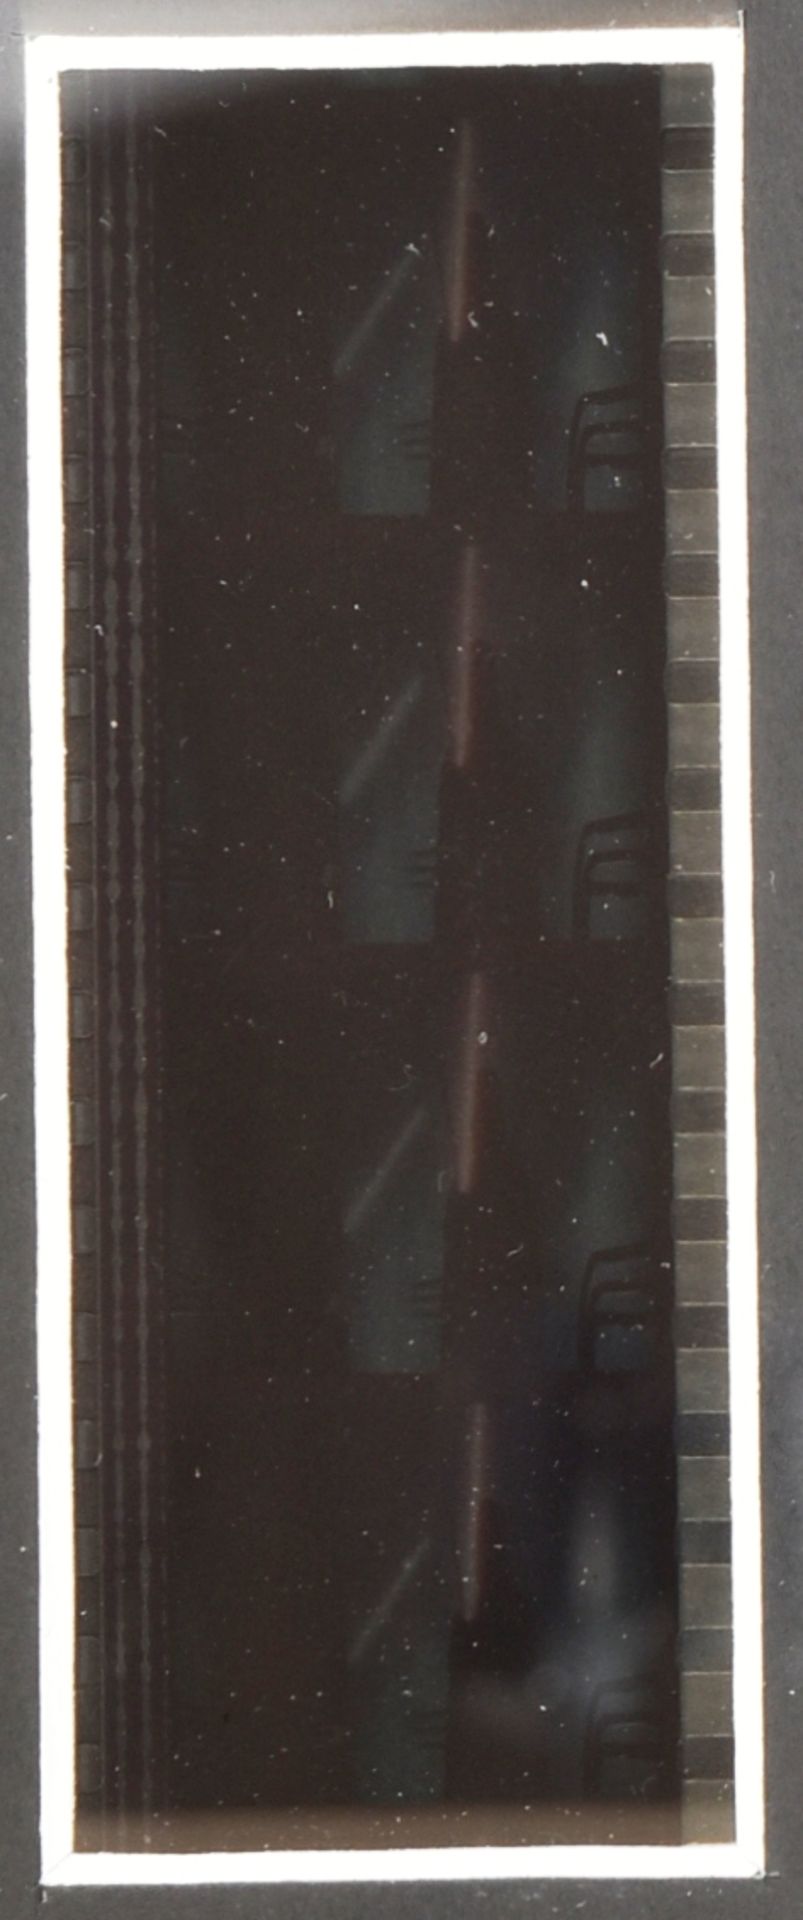 STAR WARS - JOHN MORTON (BOBA FETT) - SIGNED RYE BY POST FILMCELS - Image 3 of 3